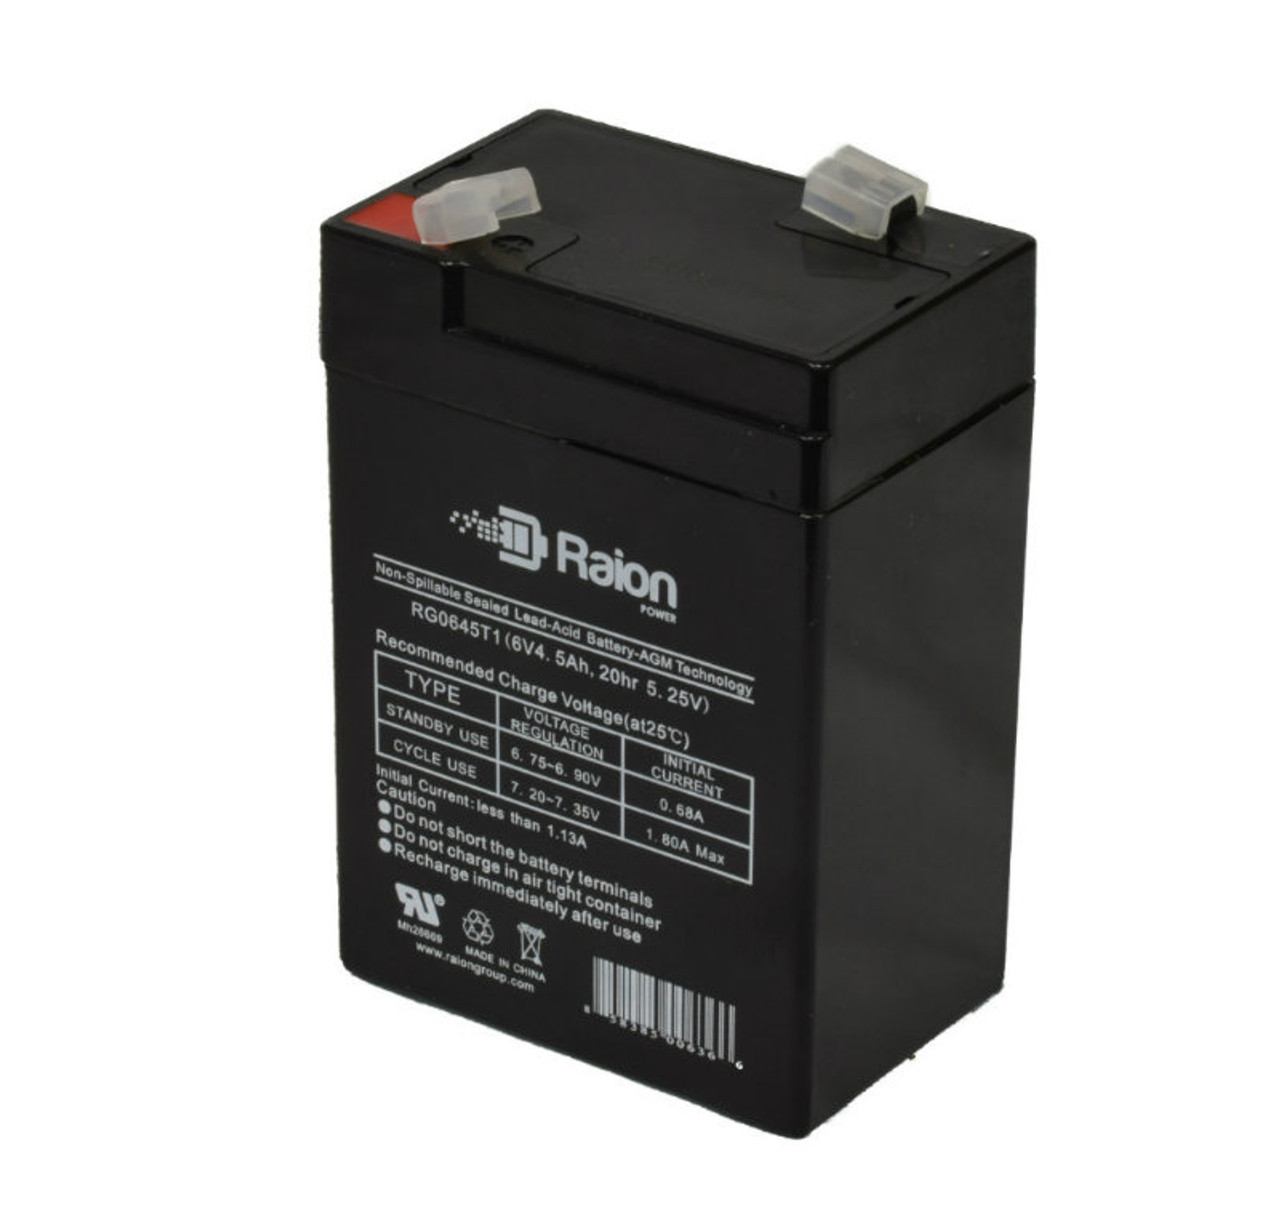 Raion Power RG0645T1 6V 4.5Ah Replacement Battery Cartridge for Emergi-Lite 80000